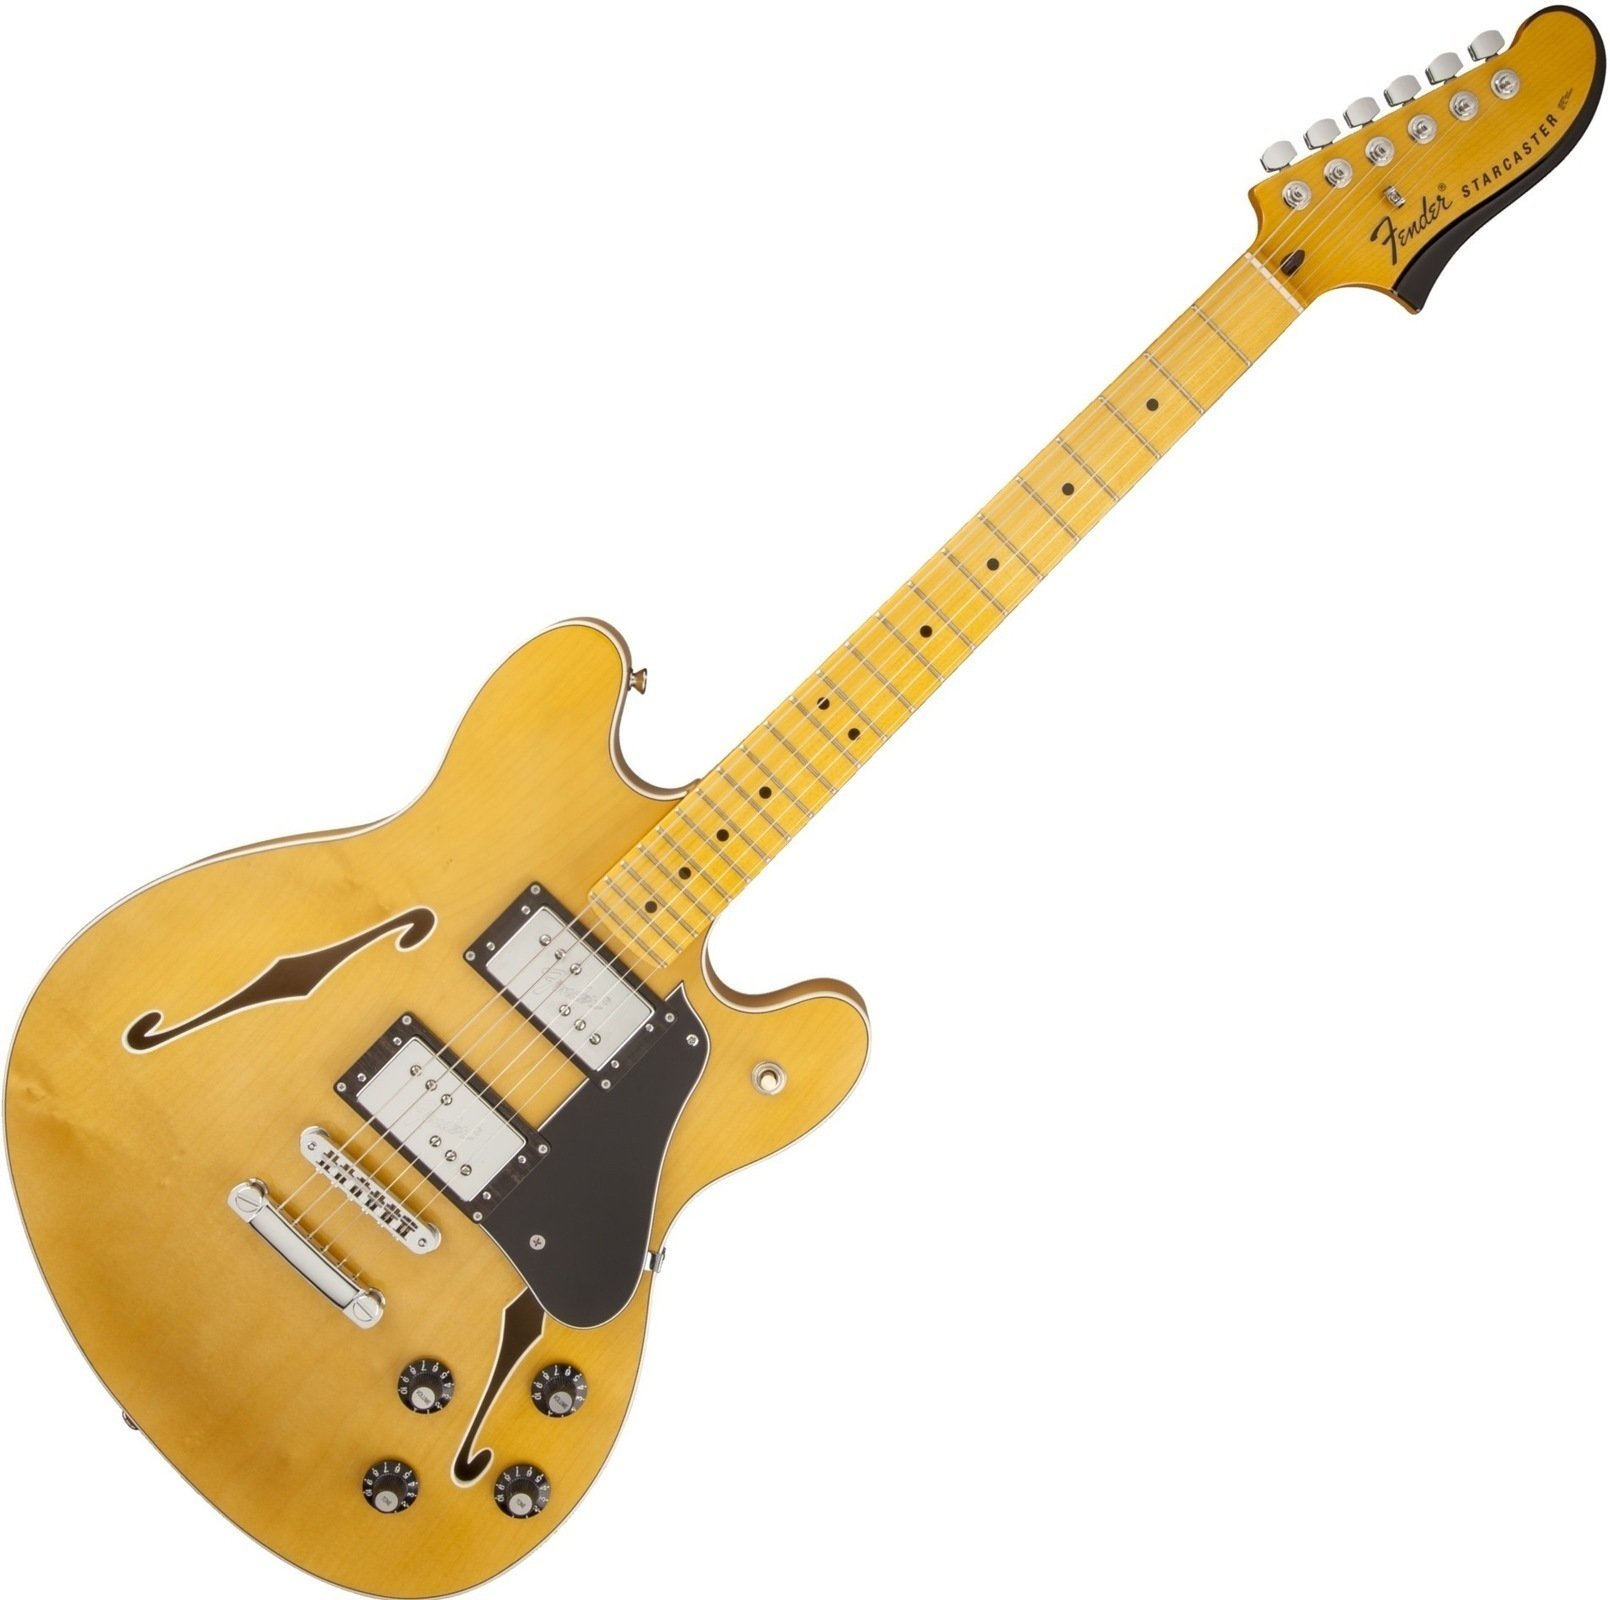 Semiakustická gitara Fender Starcaster, Maple Fingerboard, Natural